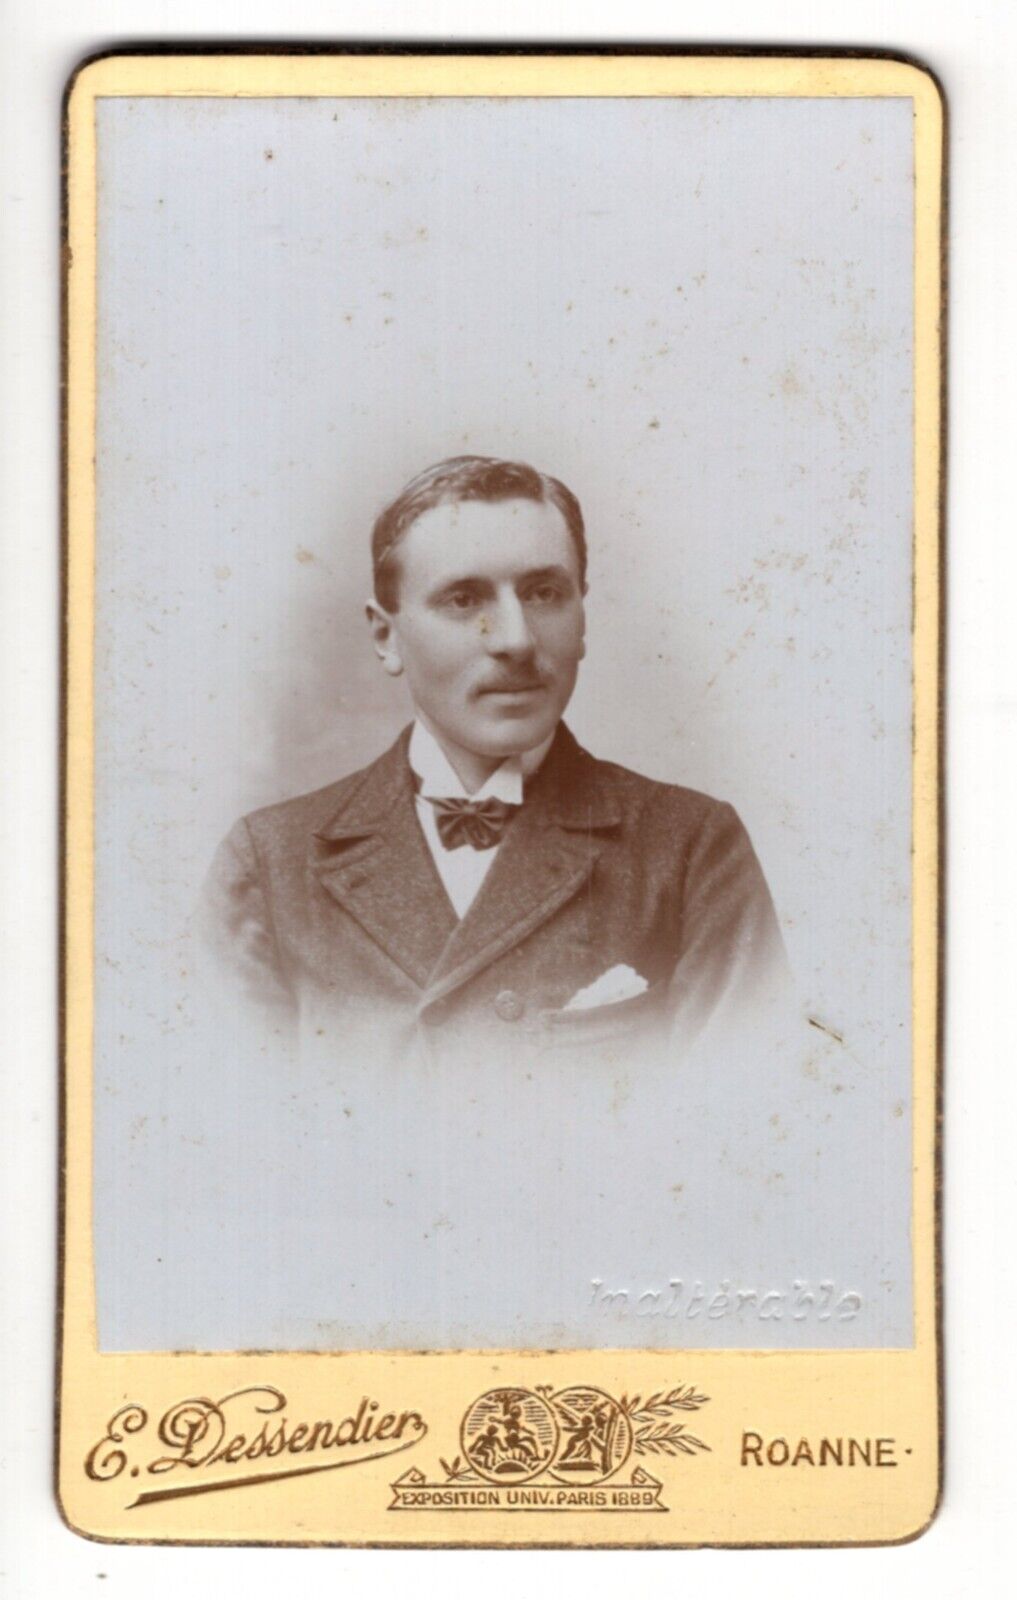 CIRCA 1890s CDV E. DESSENDIER HANDSOME MAN IN SUIT WITH MUSTACHE ROANNE FRANCE